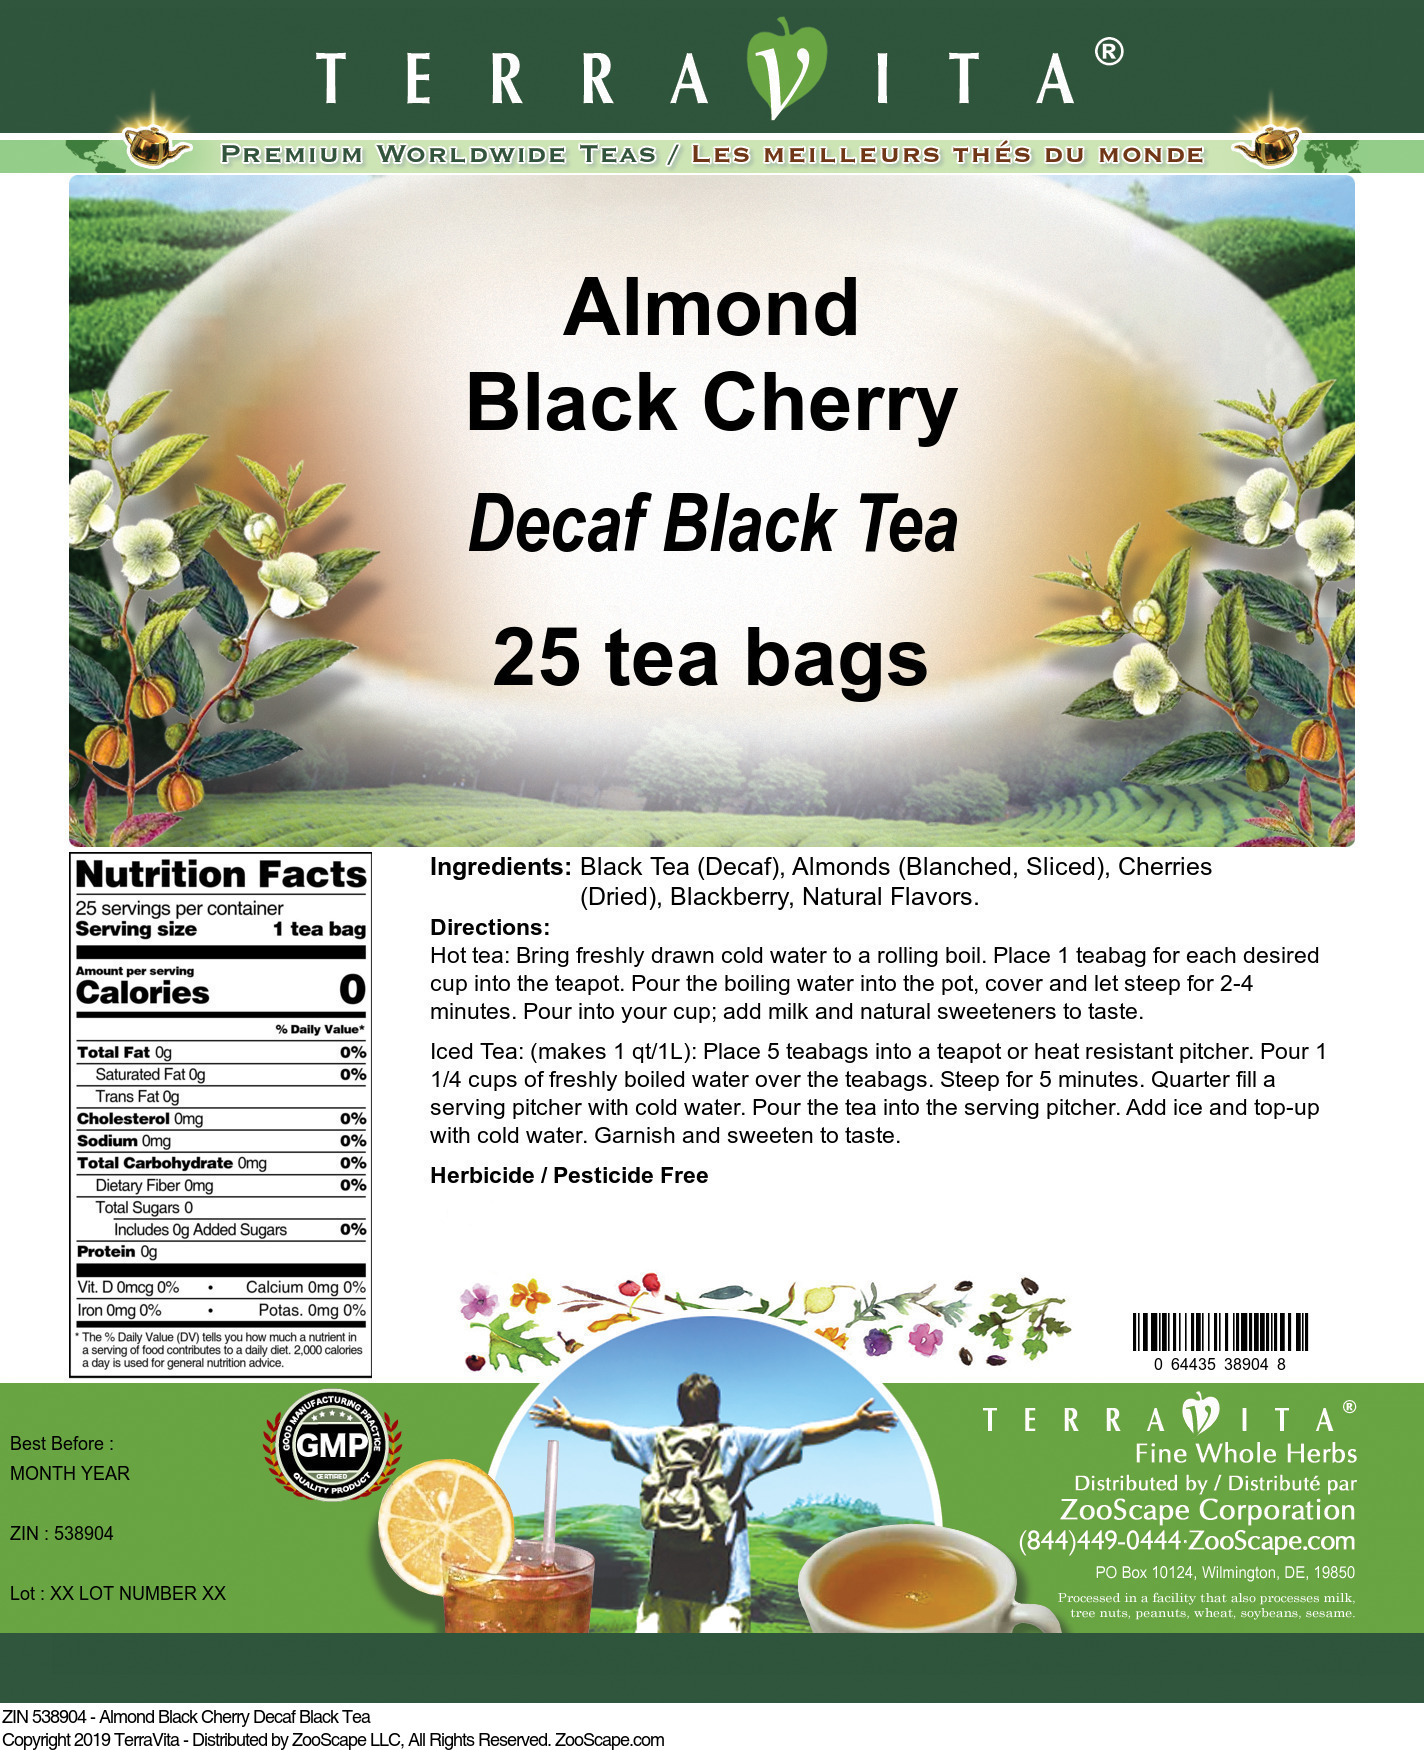 Almond Black Cherry Decaf Black Tea - Label